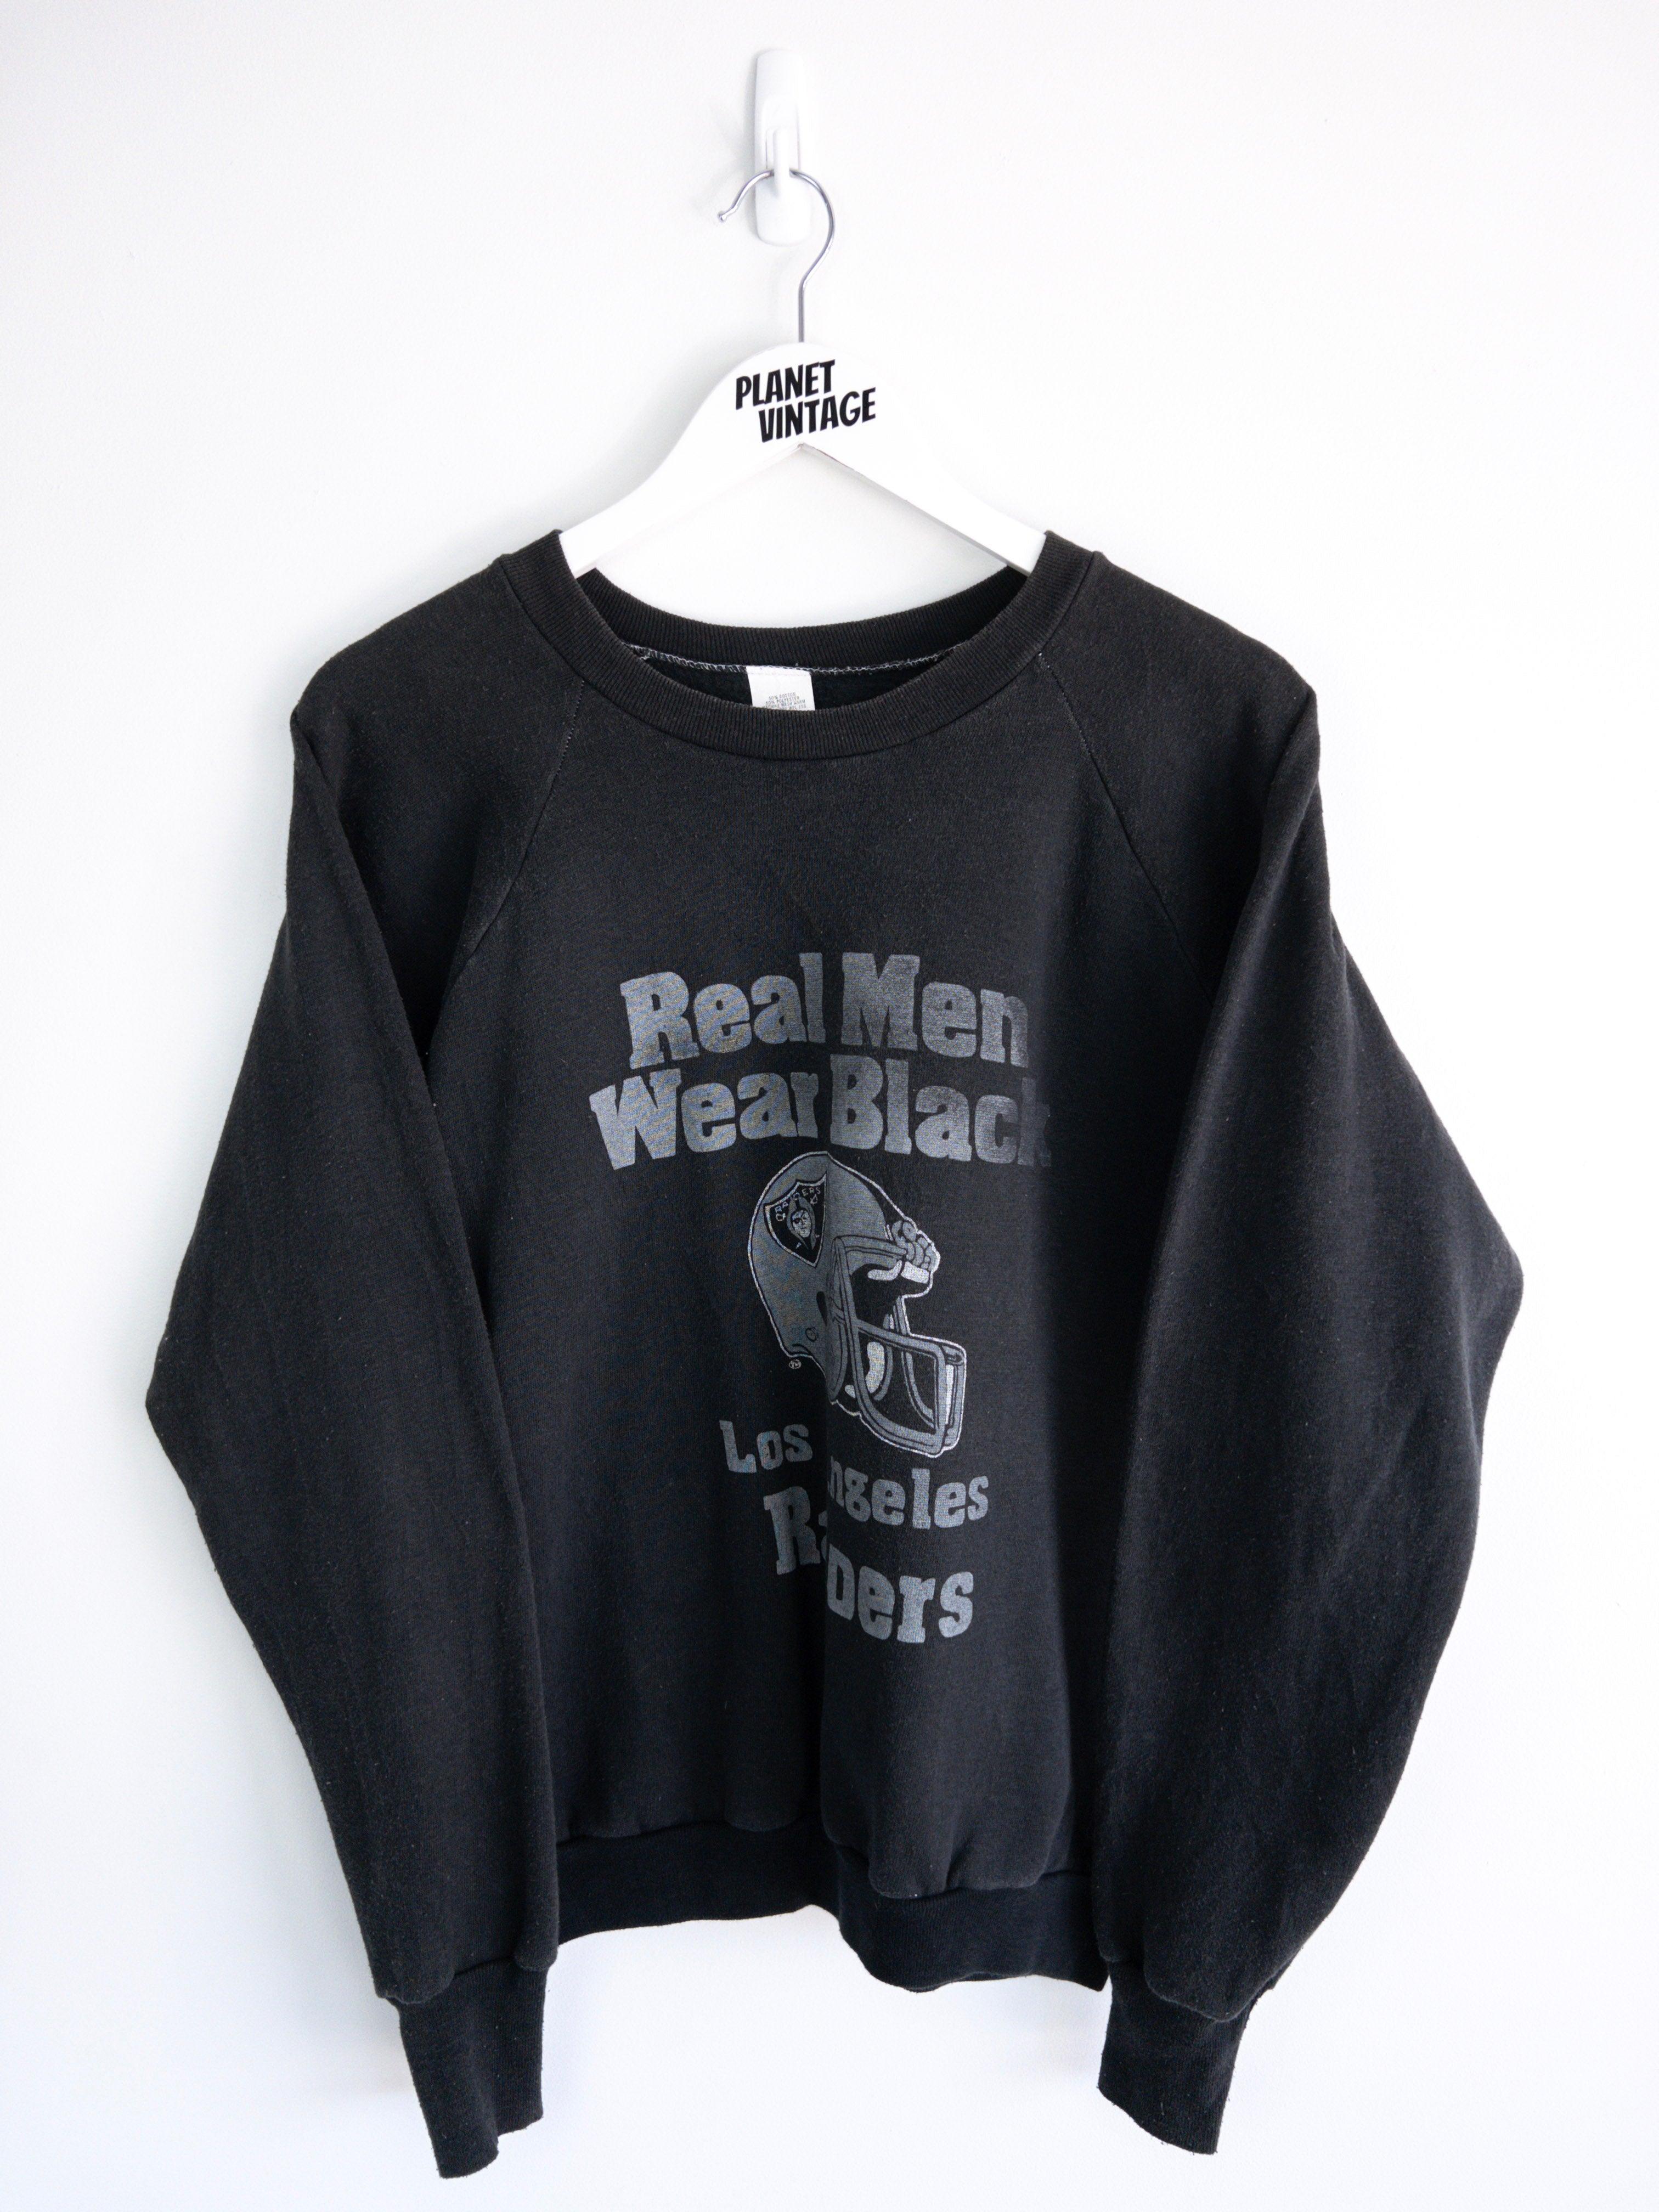 Los Angeles Raiders Sweatshirt (M) - Planet Vintage Store